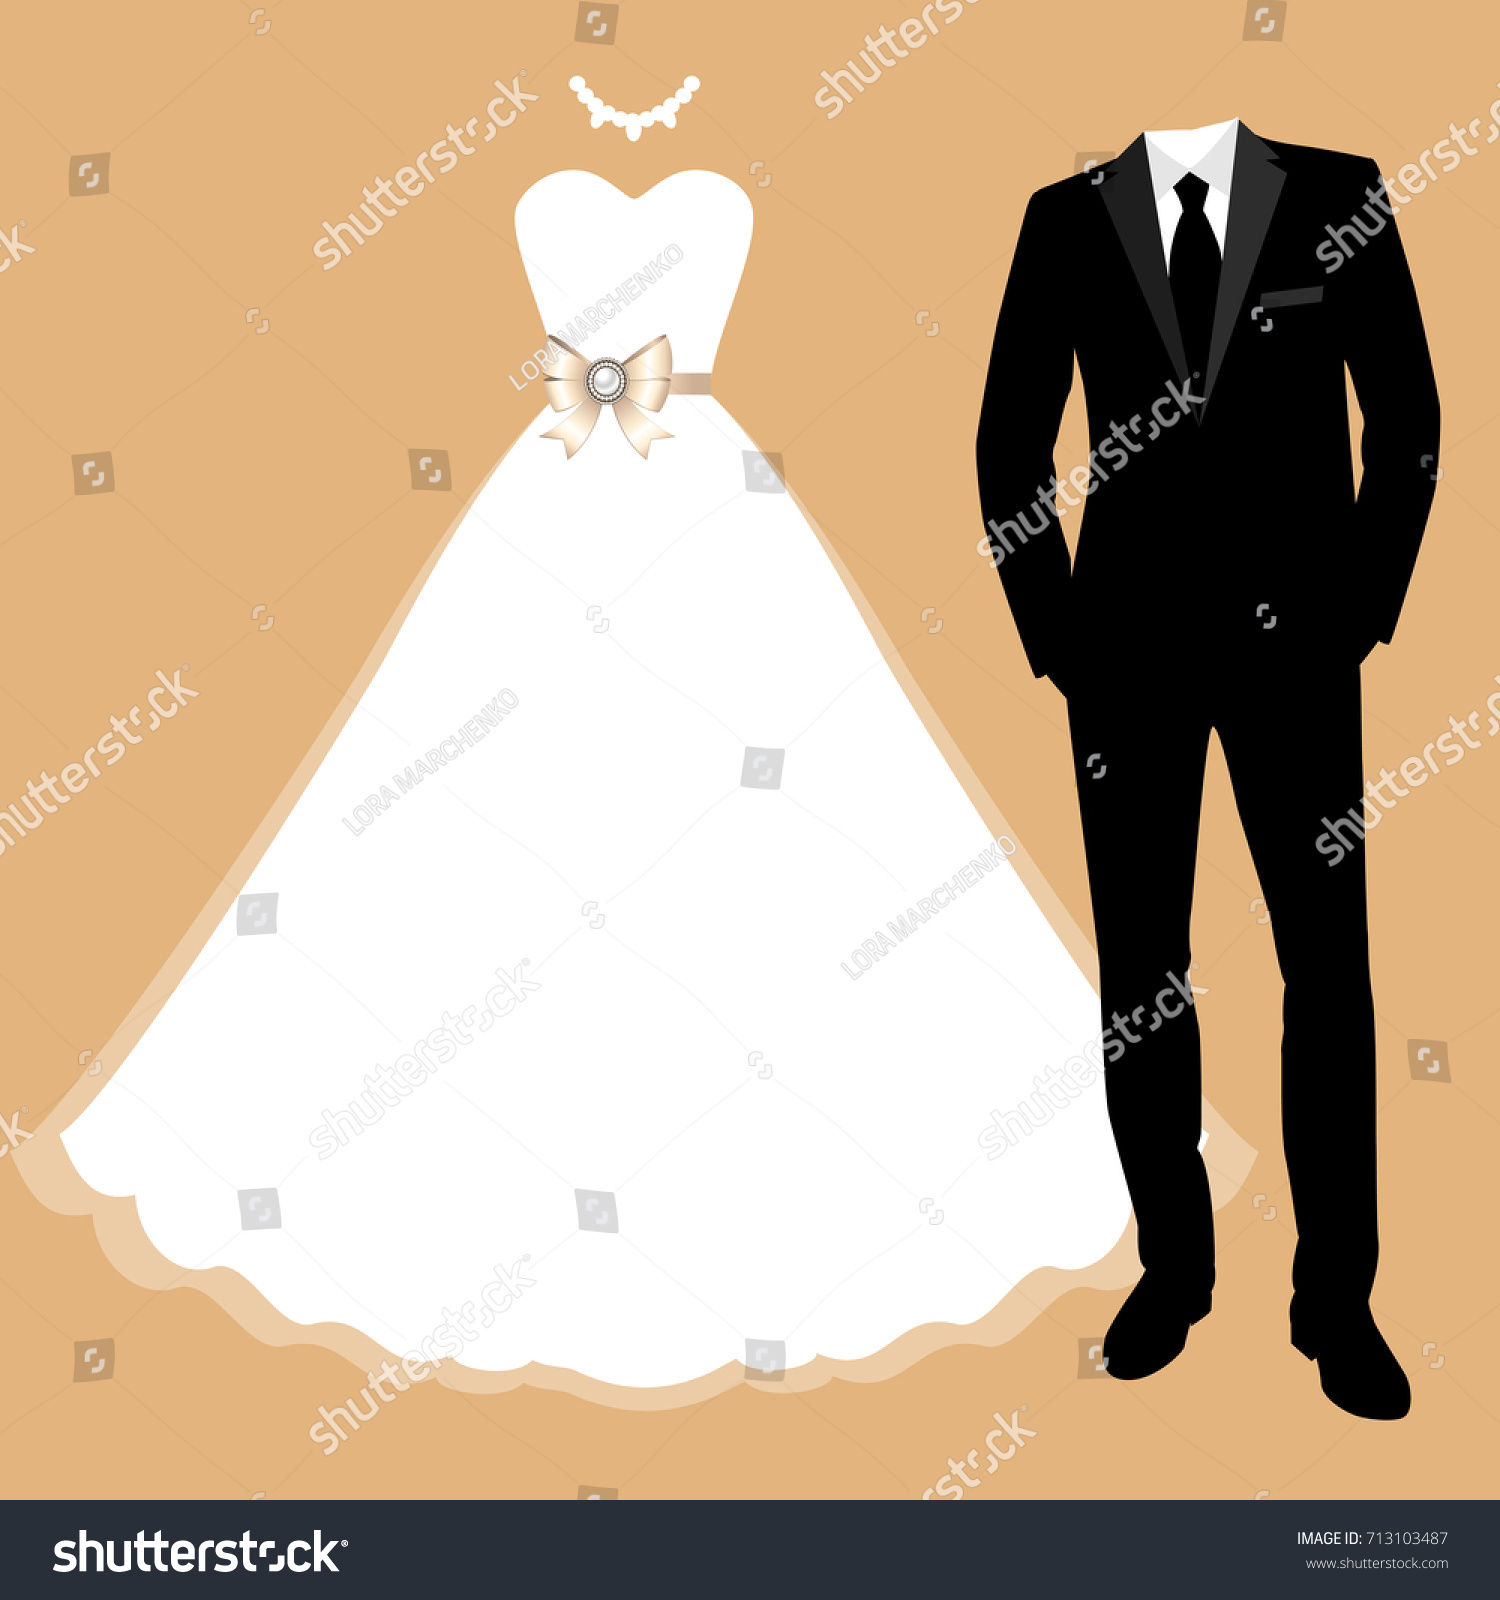 Wedding Card Clothes Bride Groom Wedding Stock Vector 713103487 ...